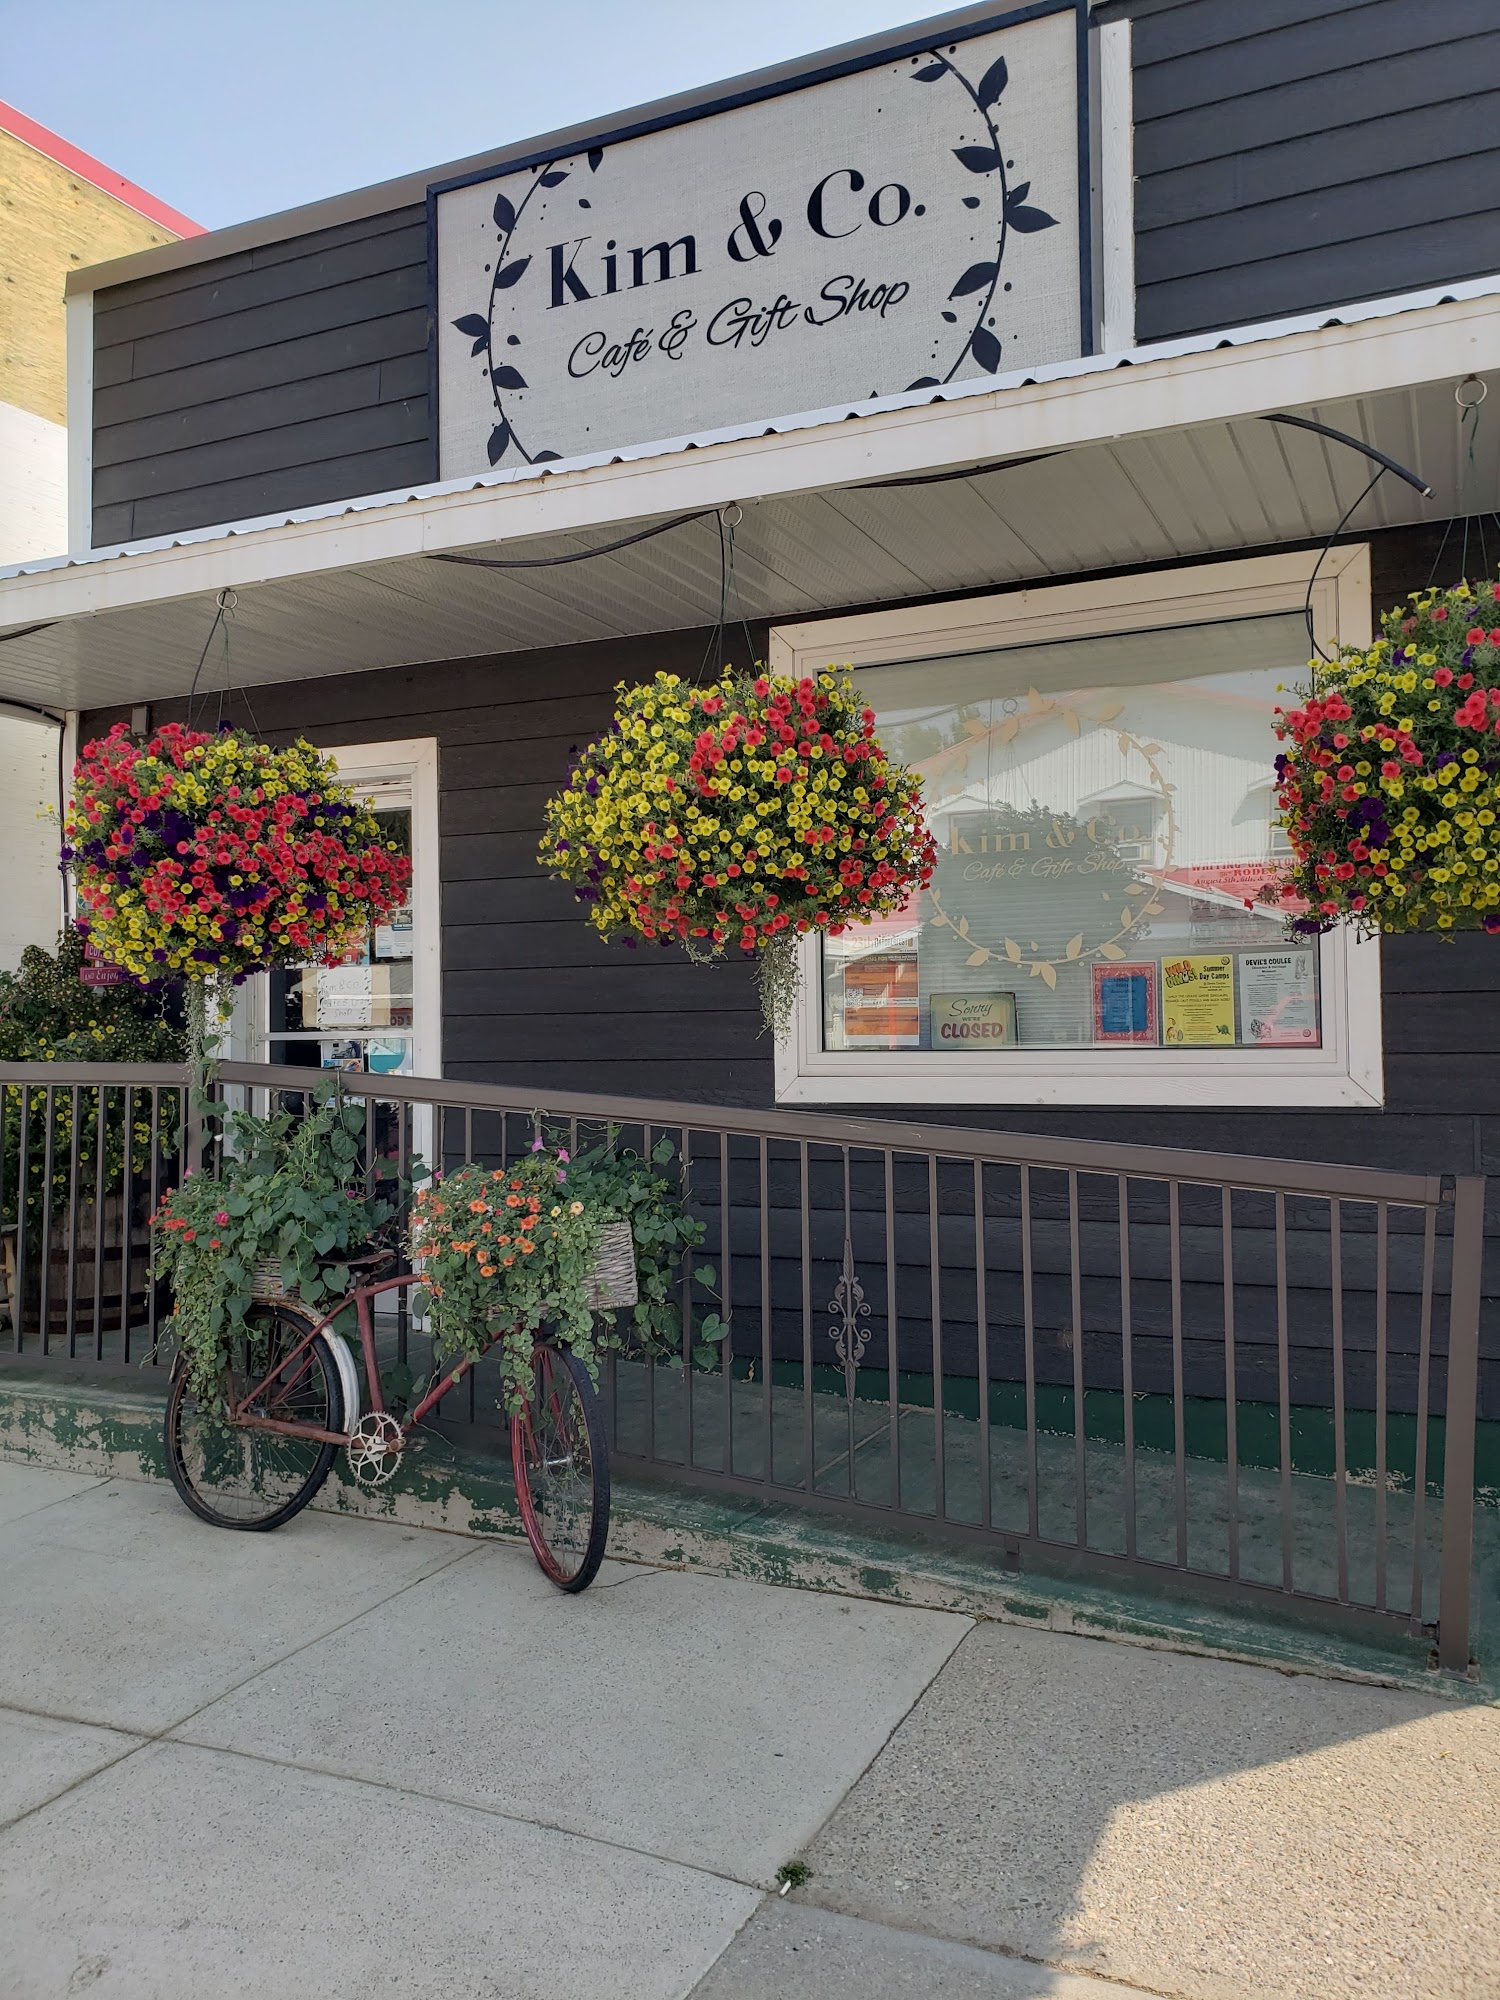 Kim & CO. cafe & gift shop